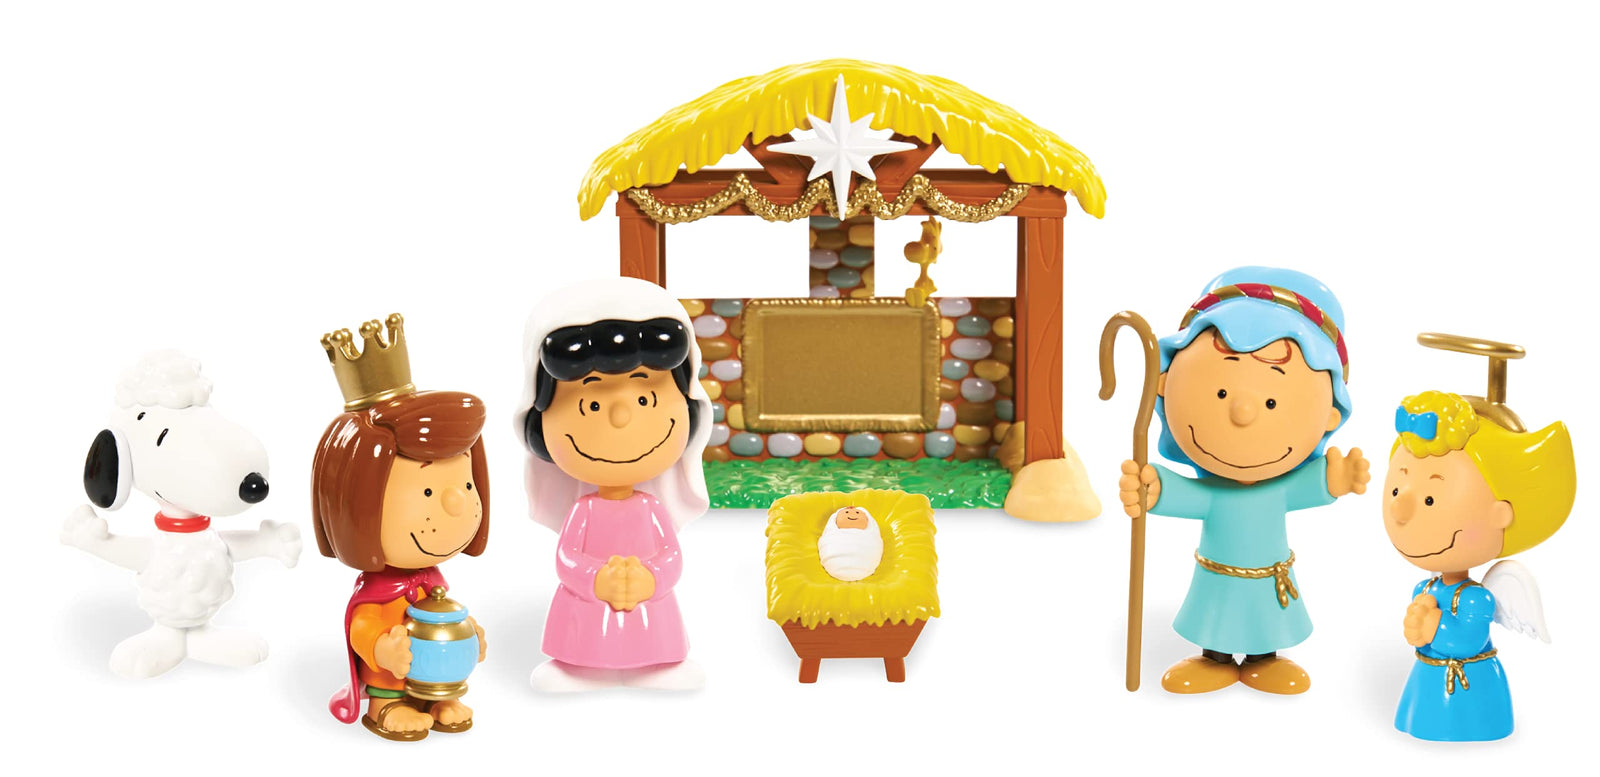 Peanuts Christmas Nativity Set, by Just Play